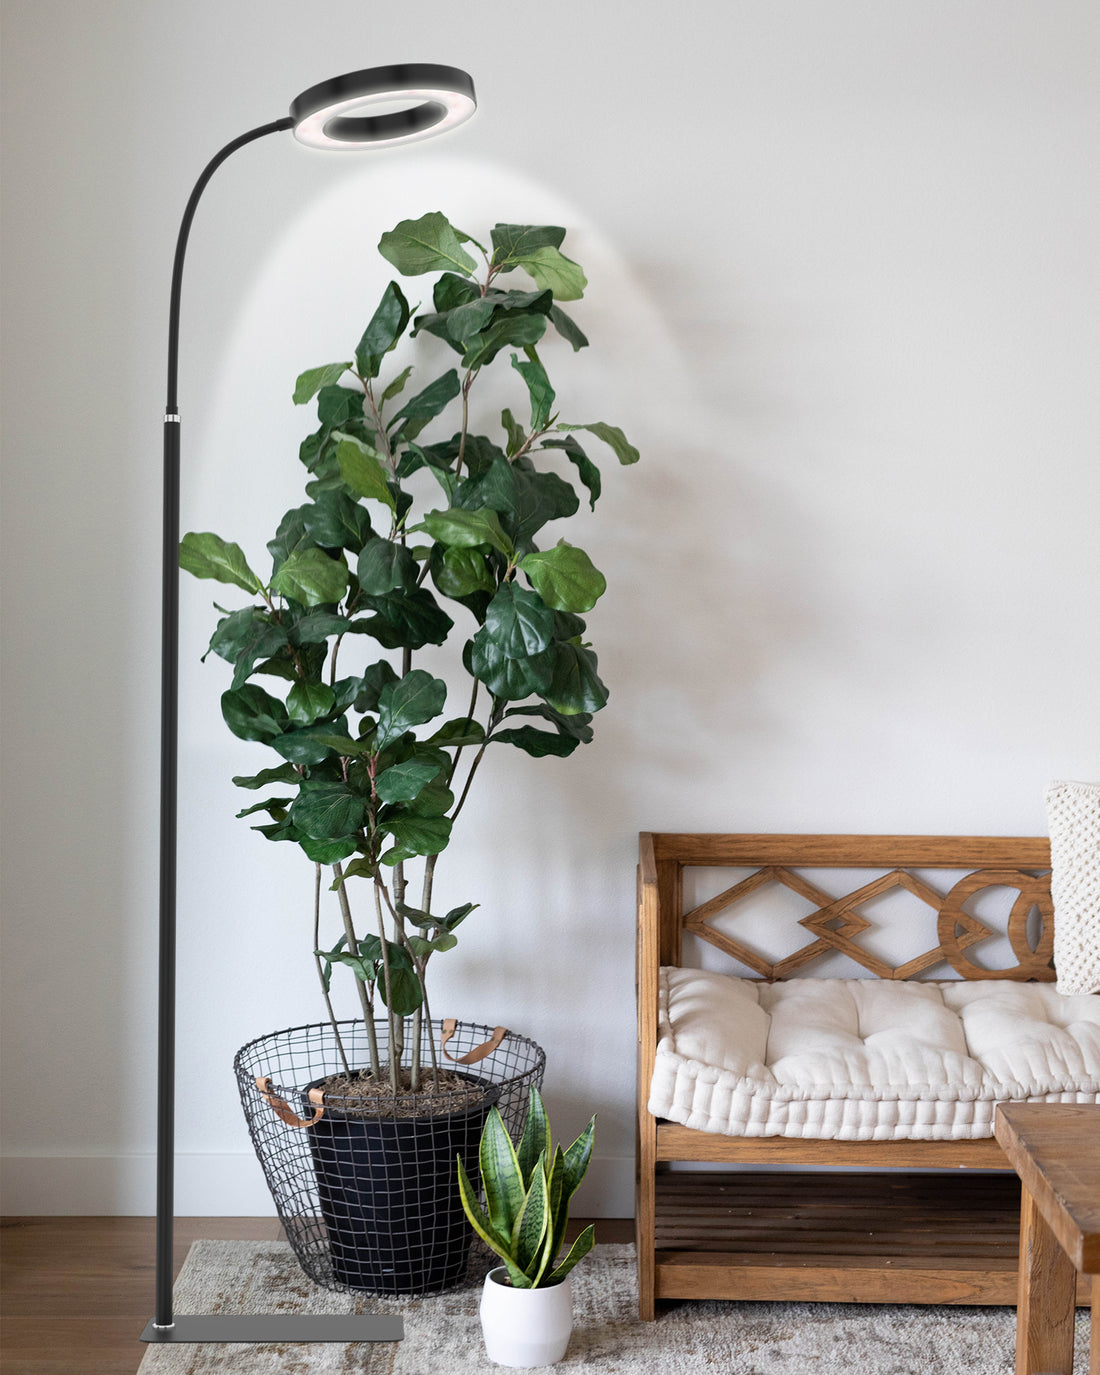 GLOWRIUM®20W Grow Light Full Spectrum LED Floor Plant Light for Indoor Plants